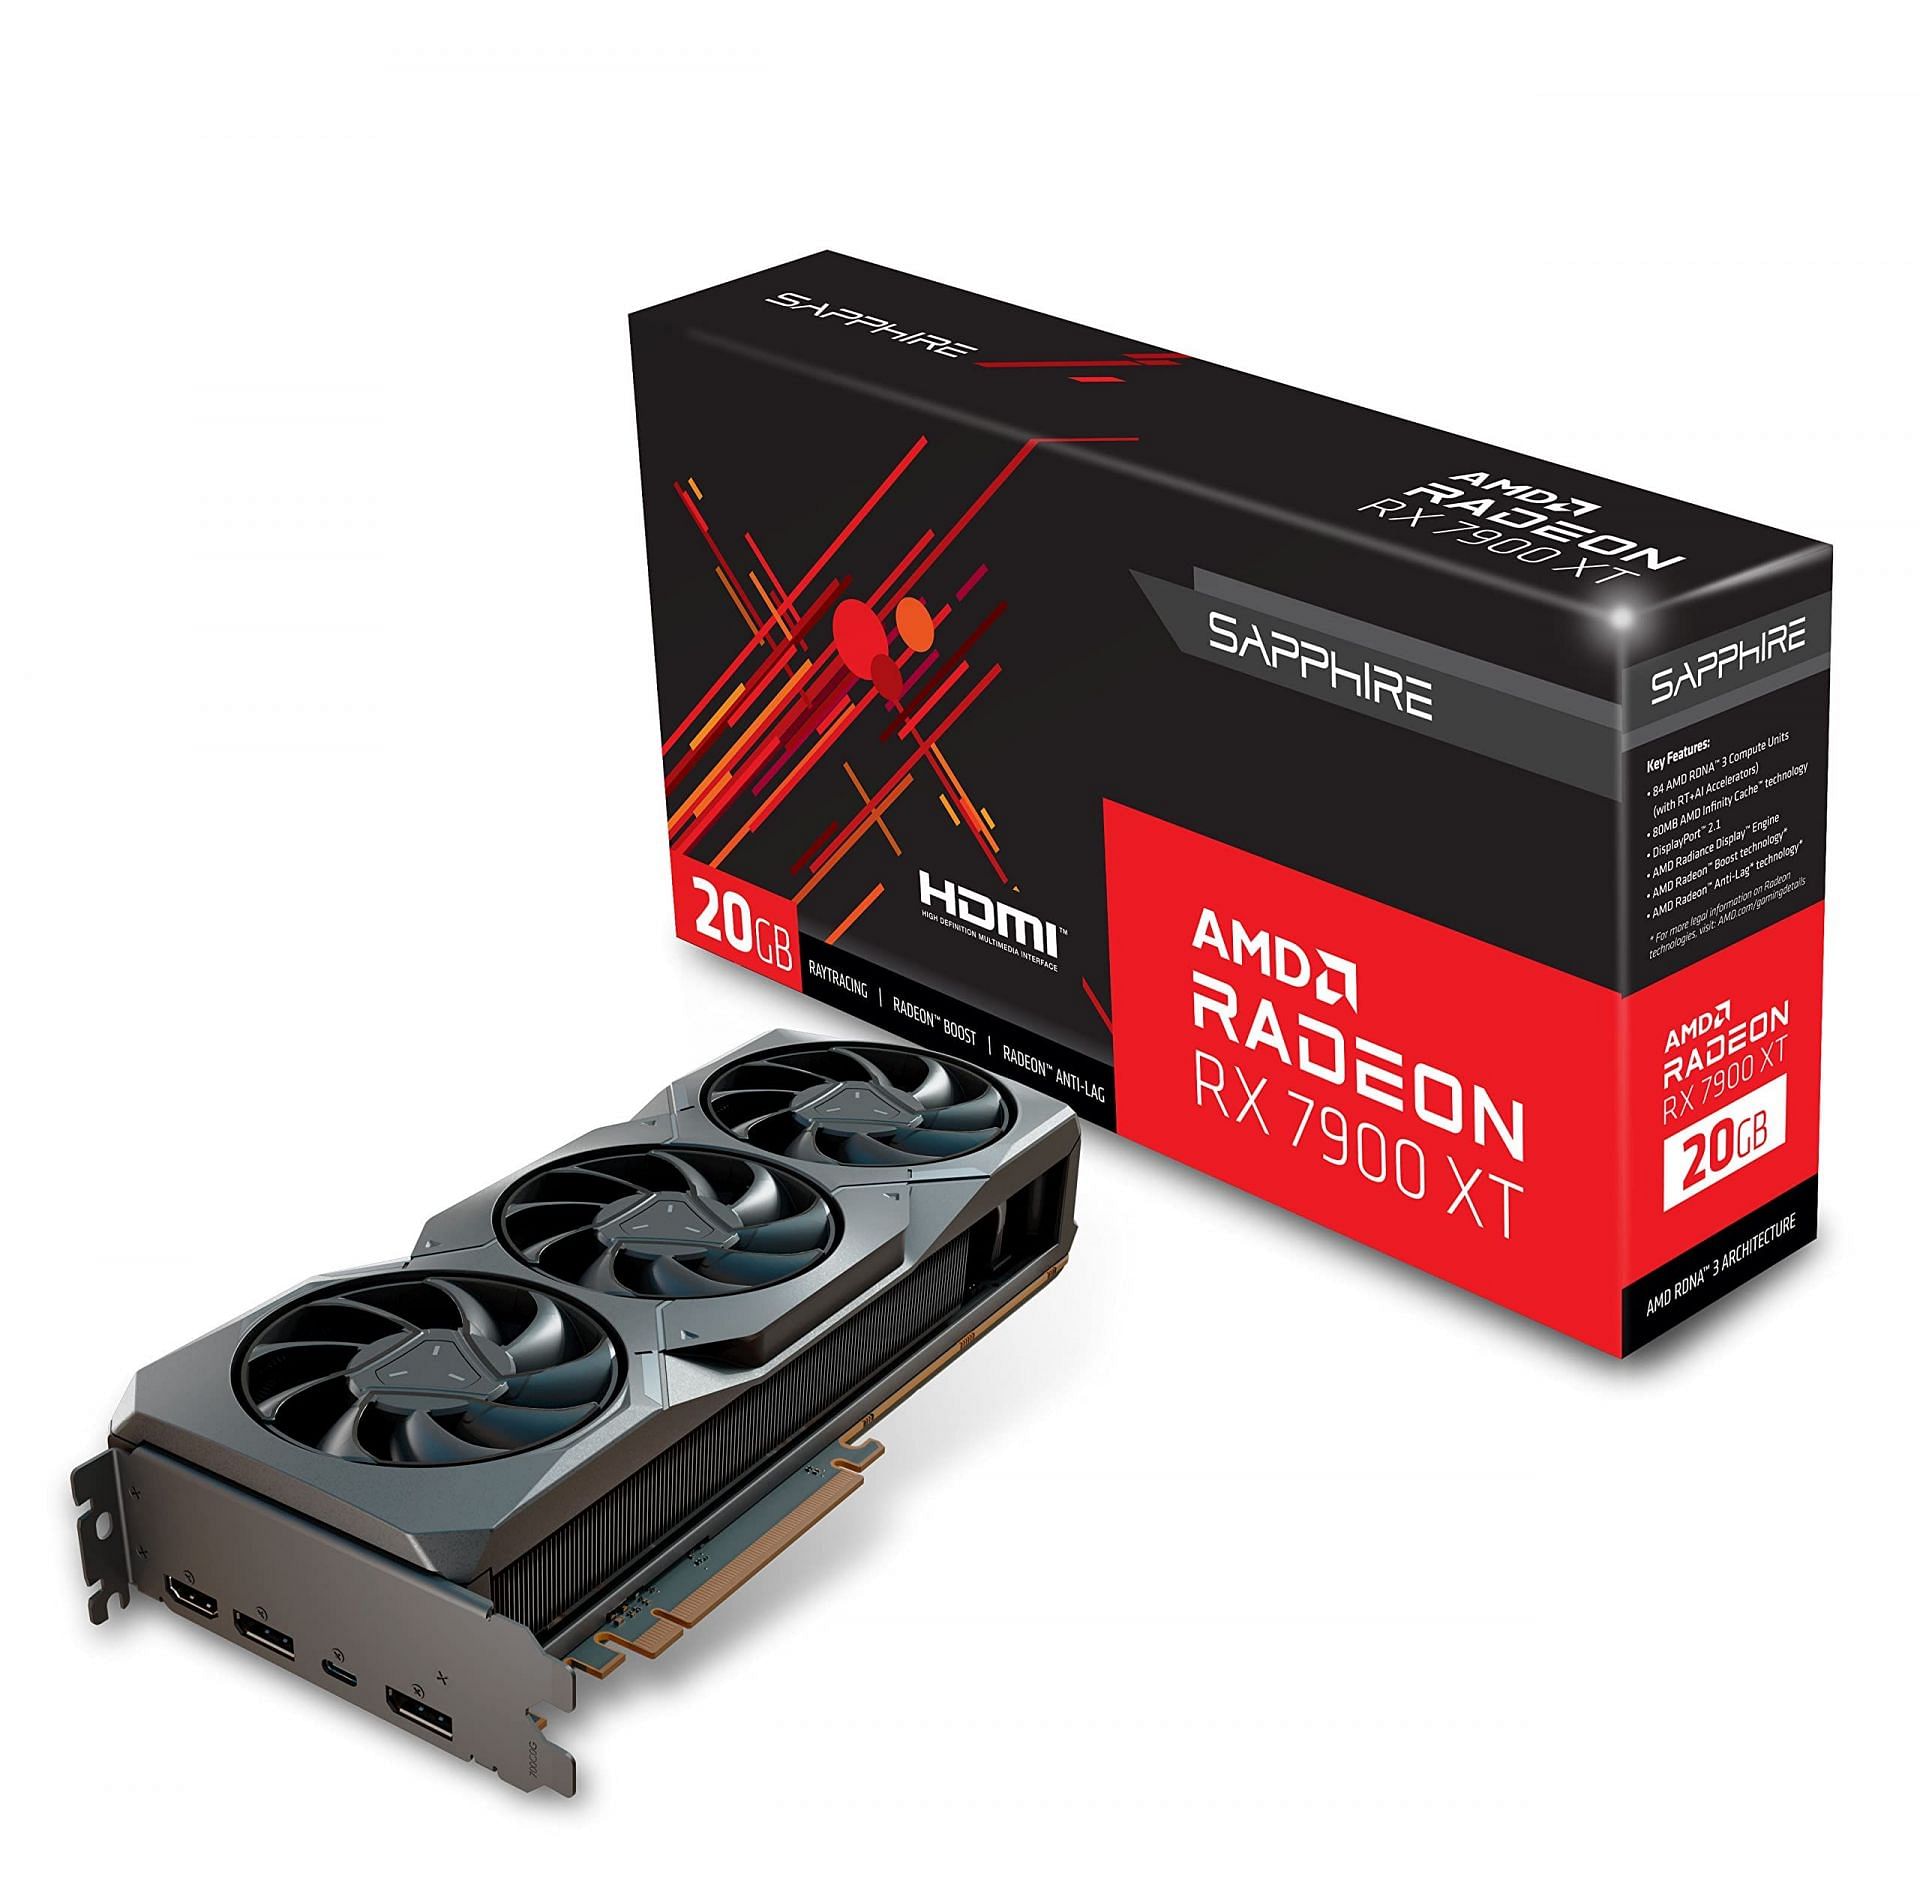 Radeon RX 7900 XT (Image via Amazon)